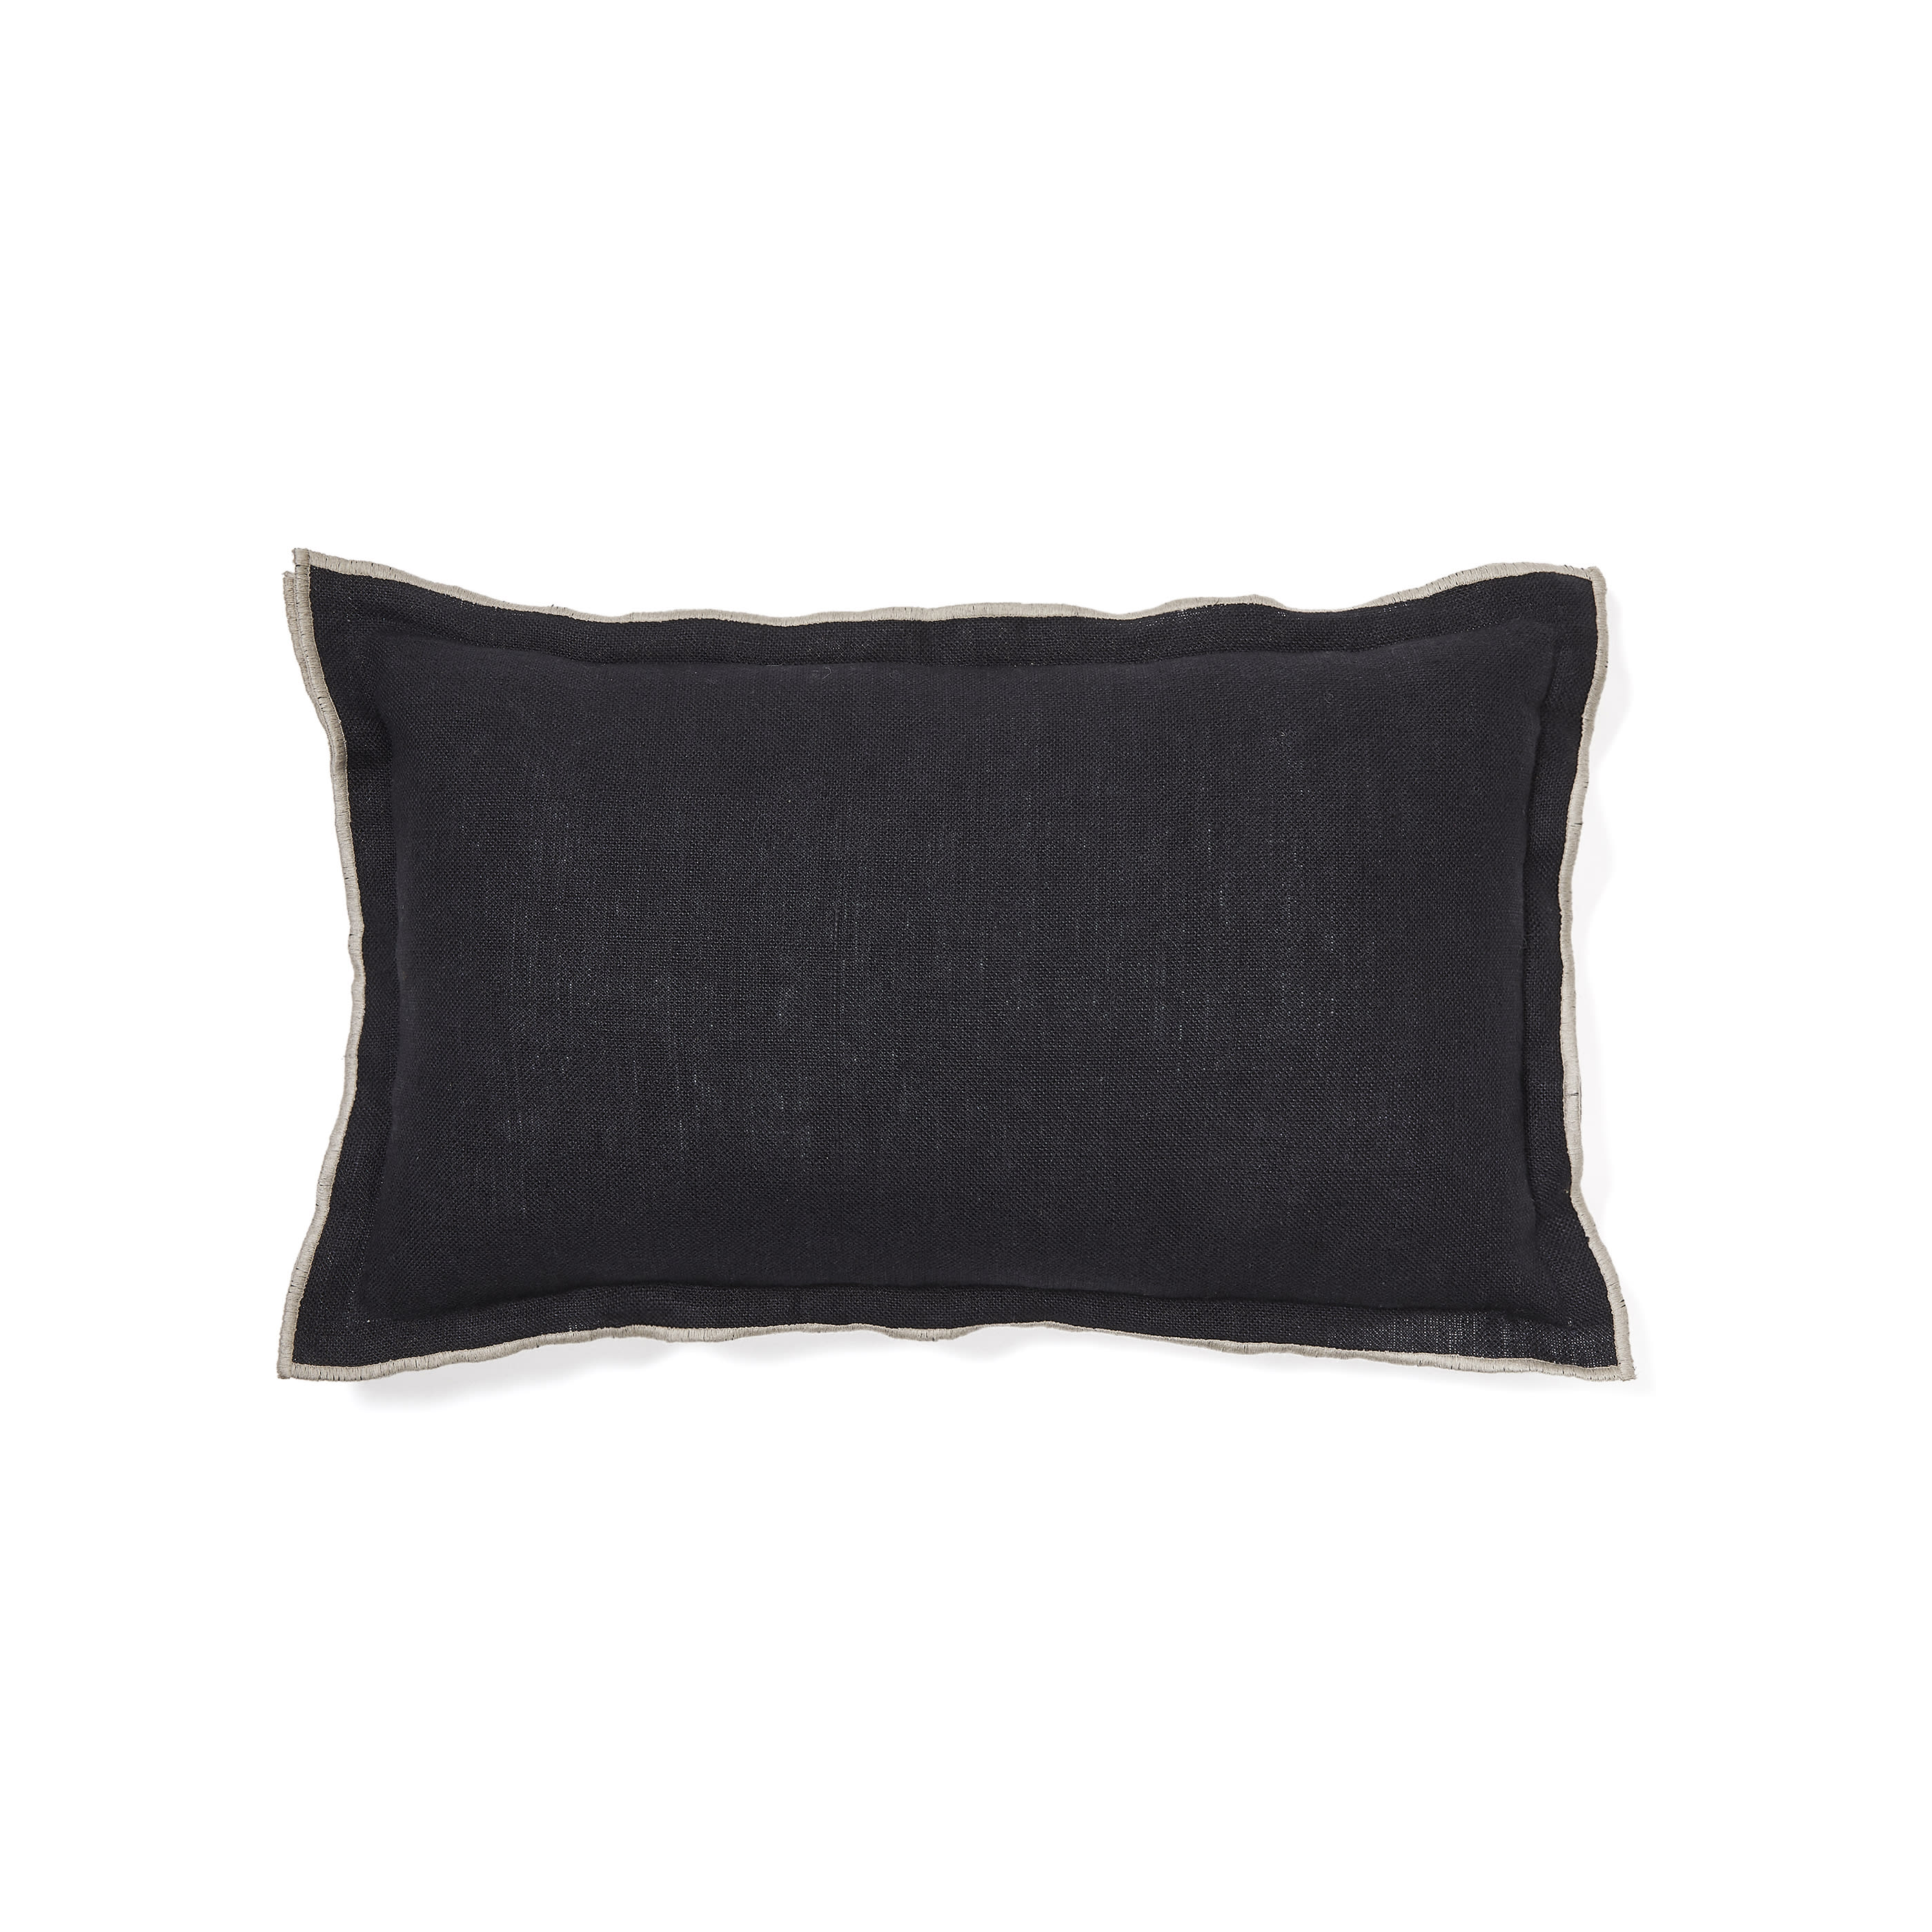 Sagi beige and black linen pillowcase 30 x 50 cm